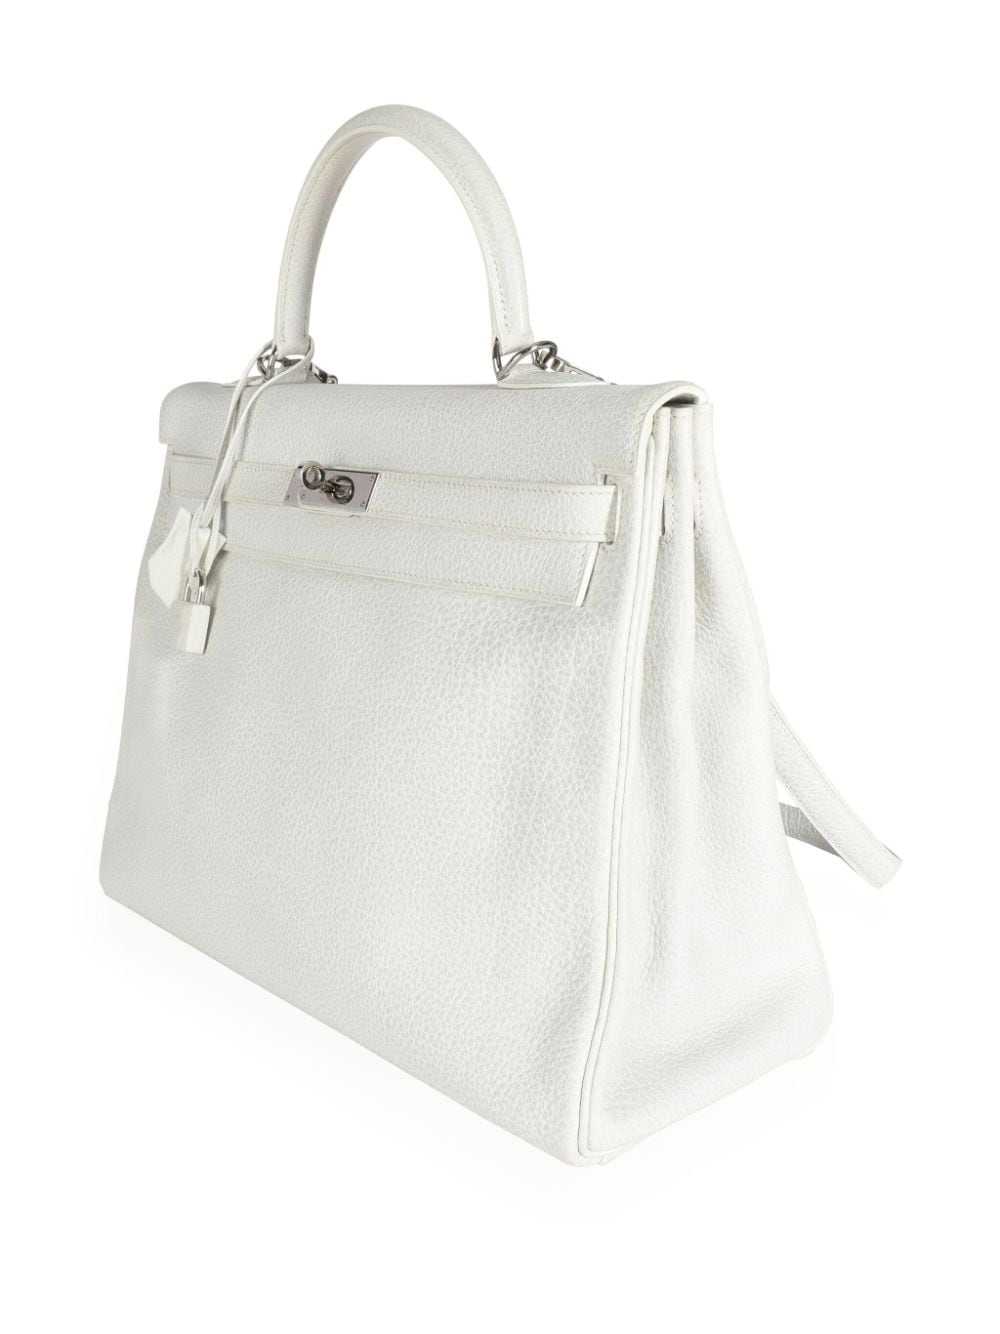 Hermès Pre-Owned Retourné Kelly 35 handbag - White - image 2